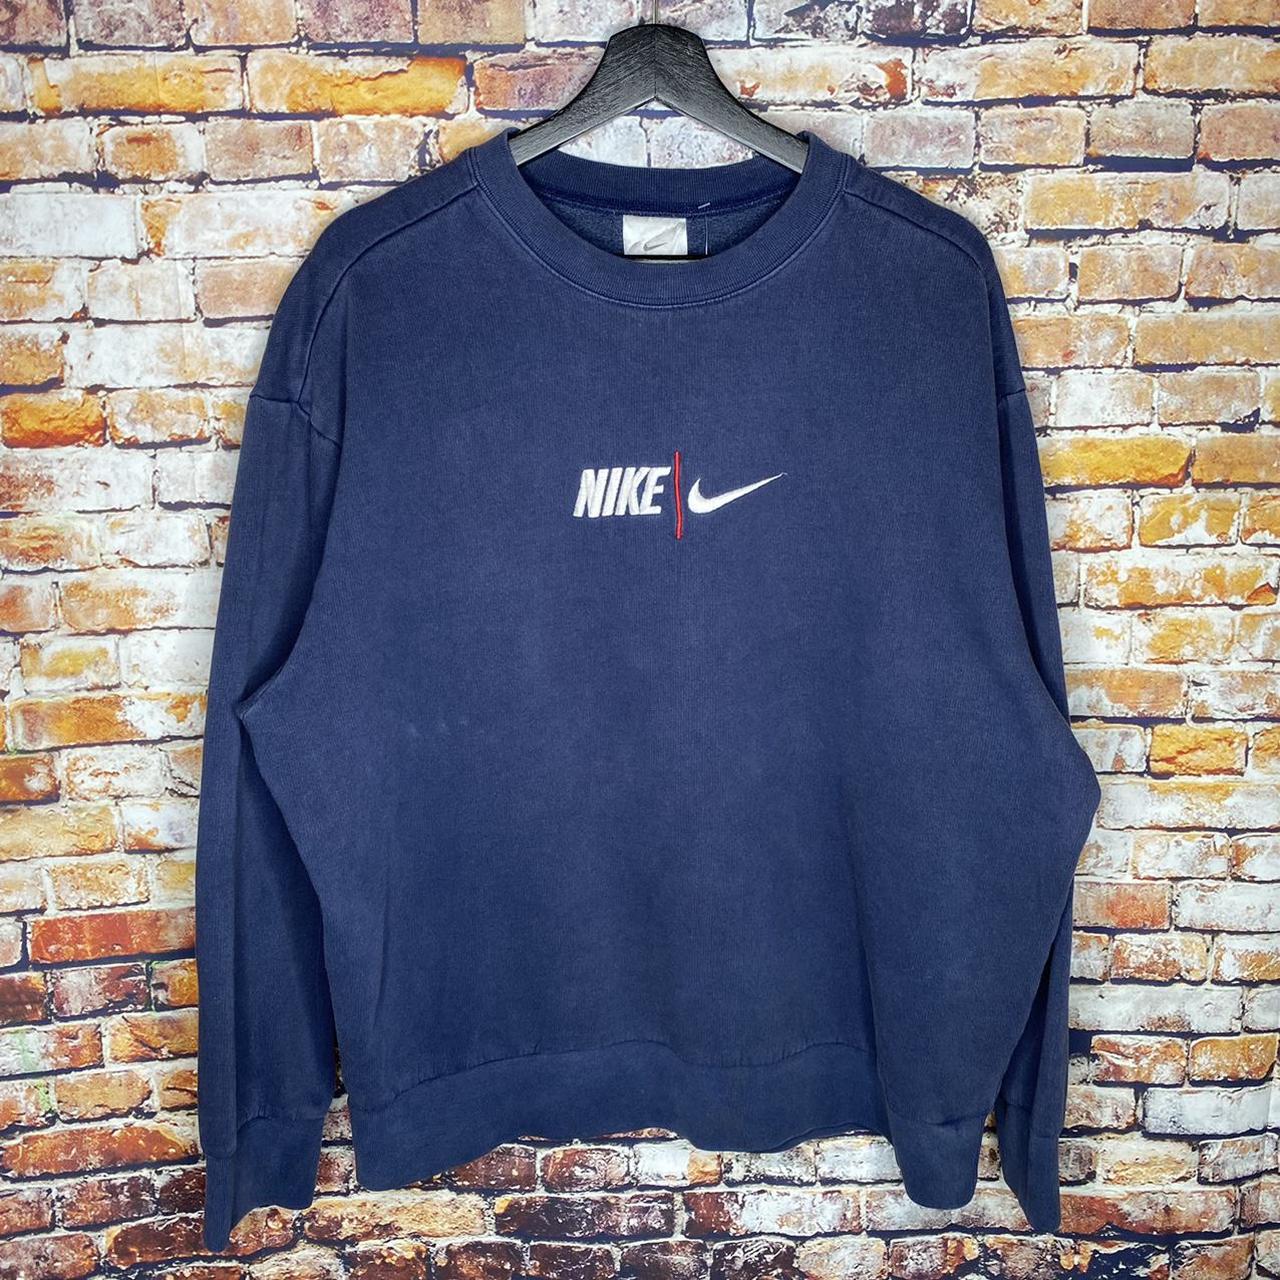 Vintage Nike Spell Out Embroidered Crewneck... - Depop